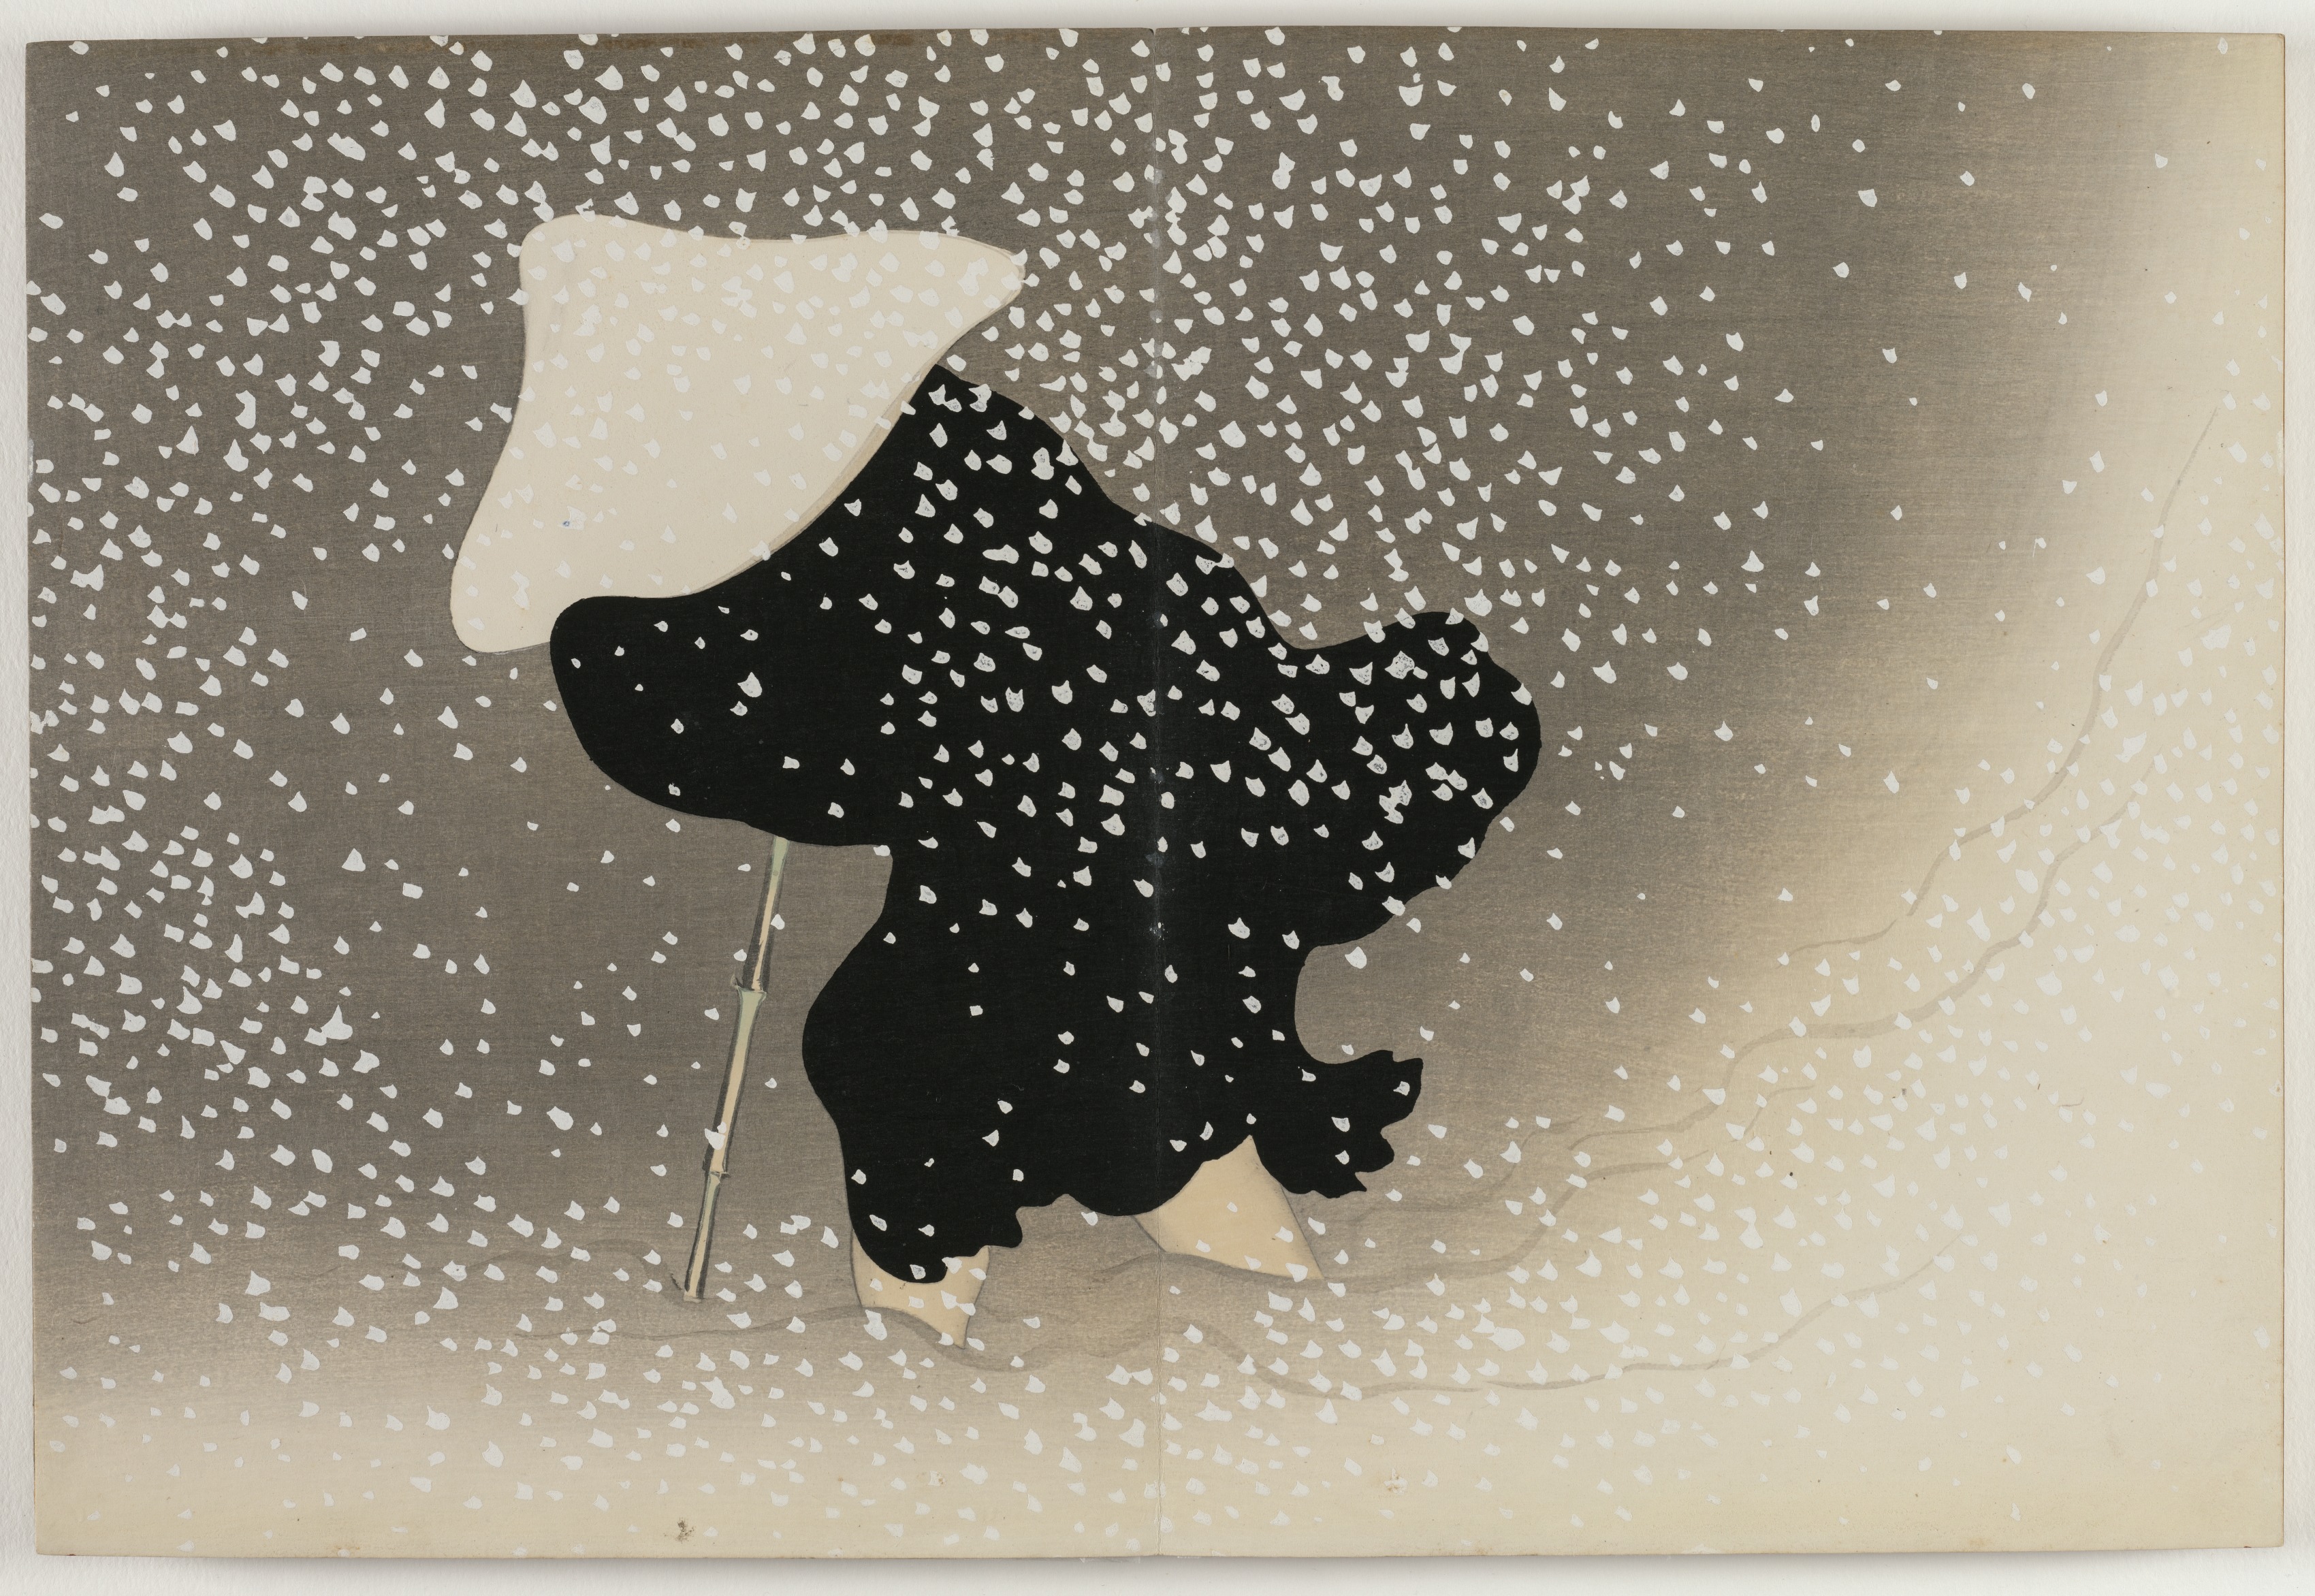 Flowers of a Hundred Worlds: Swirling Snow by Kamisaka Sekka - 1909-10 - 29.9 x 22.1 cm Metropolitan Museum of Art